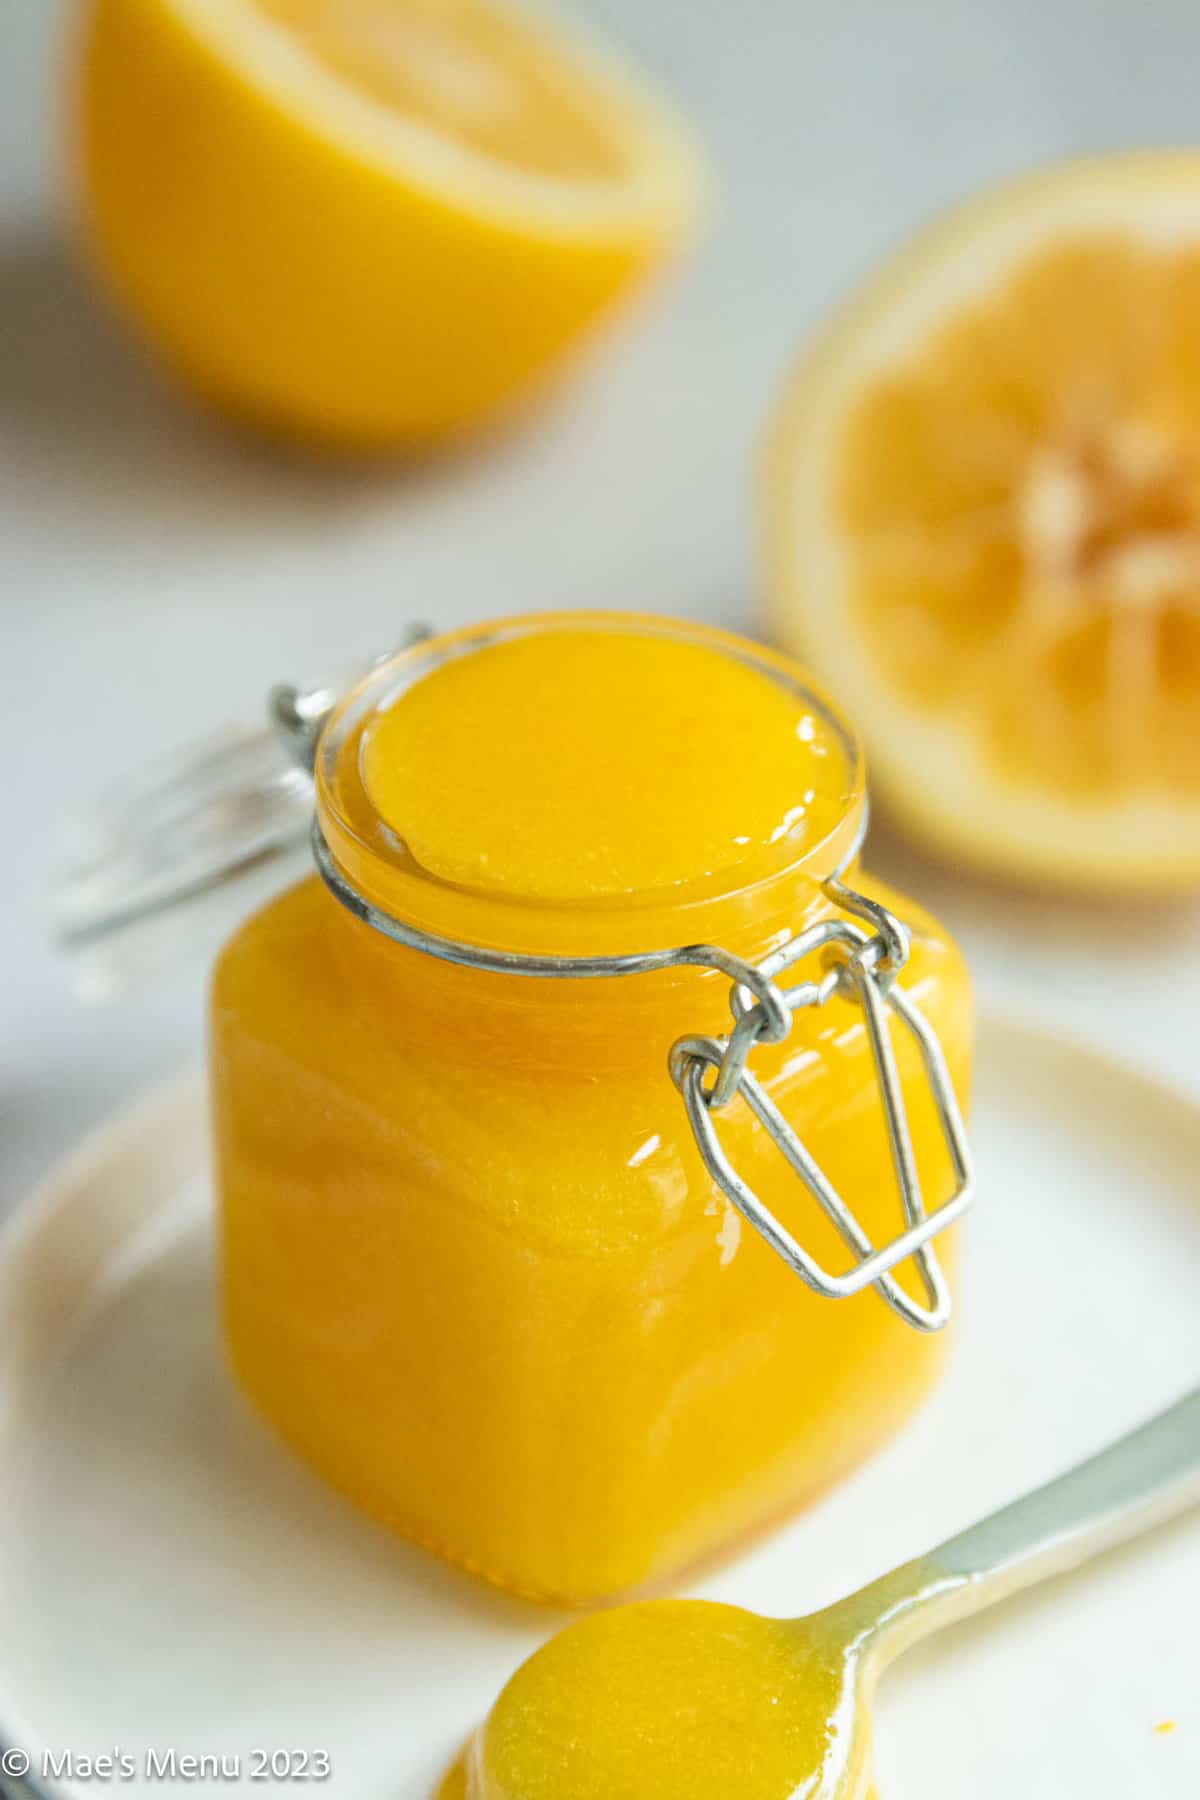 Meyer Lemon Curd